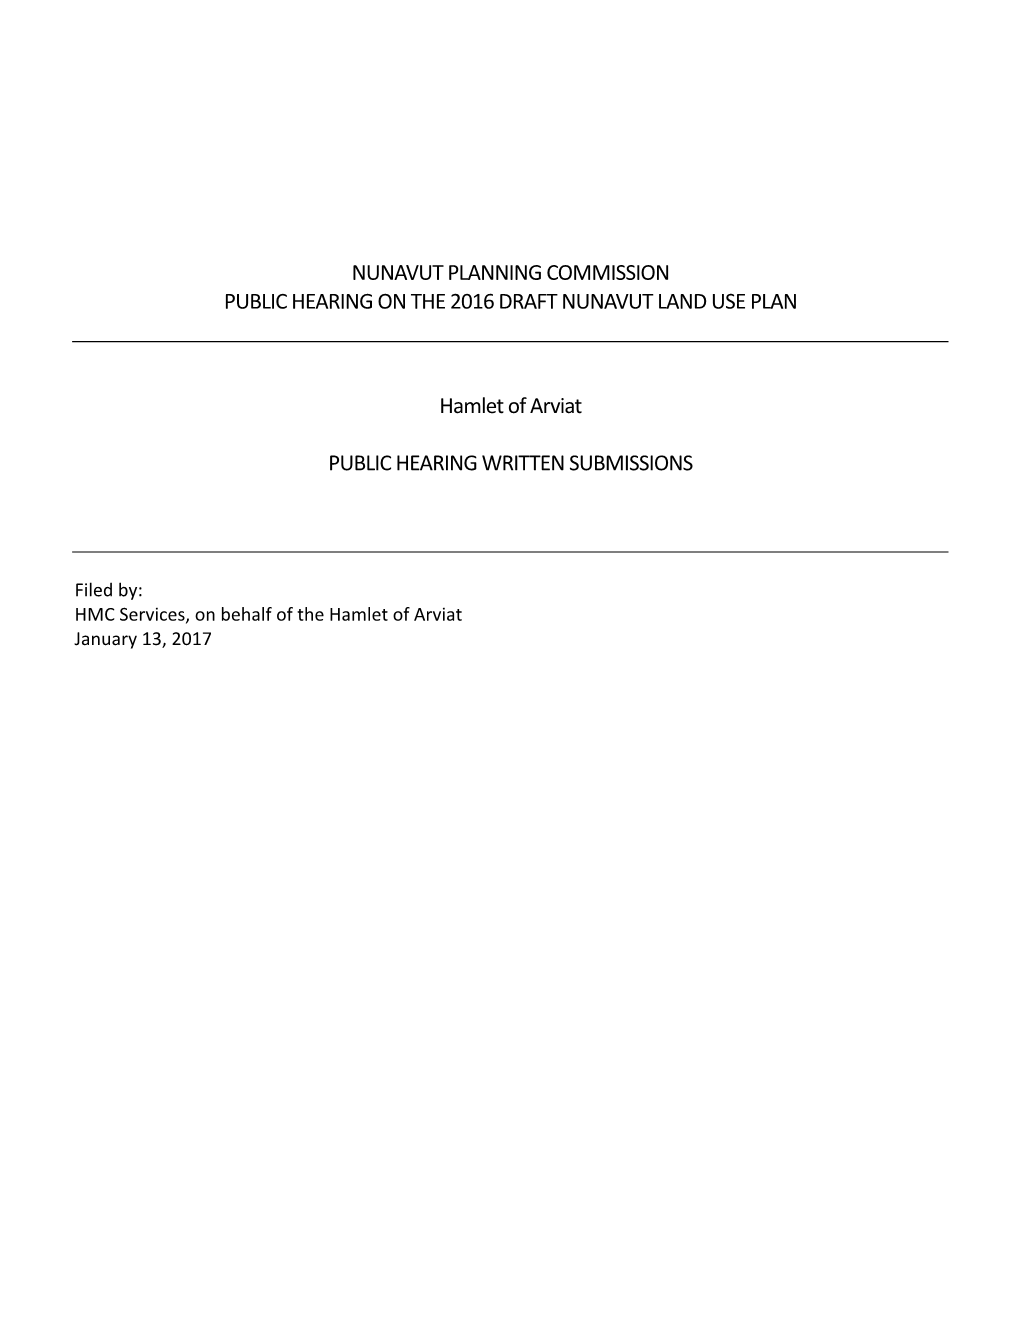 Nunavut Planning Commission Public Hearing on the 2016 Draft Nunavut Land Use Plan